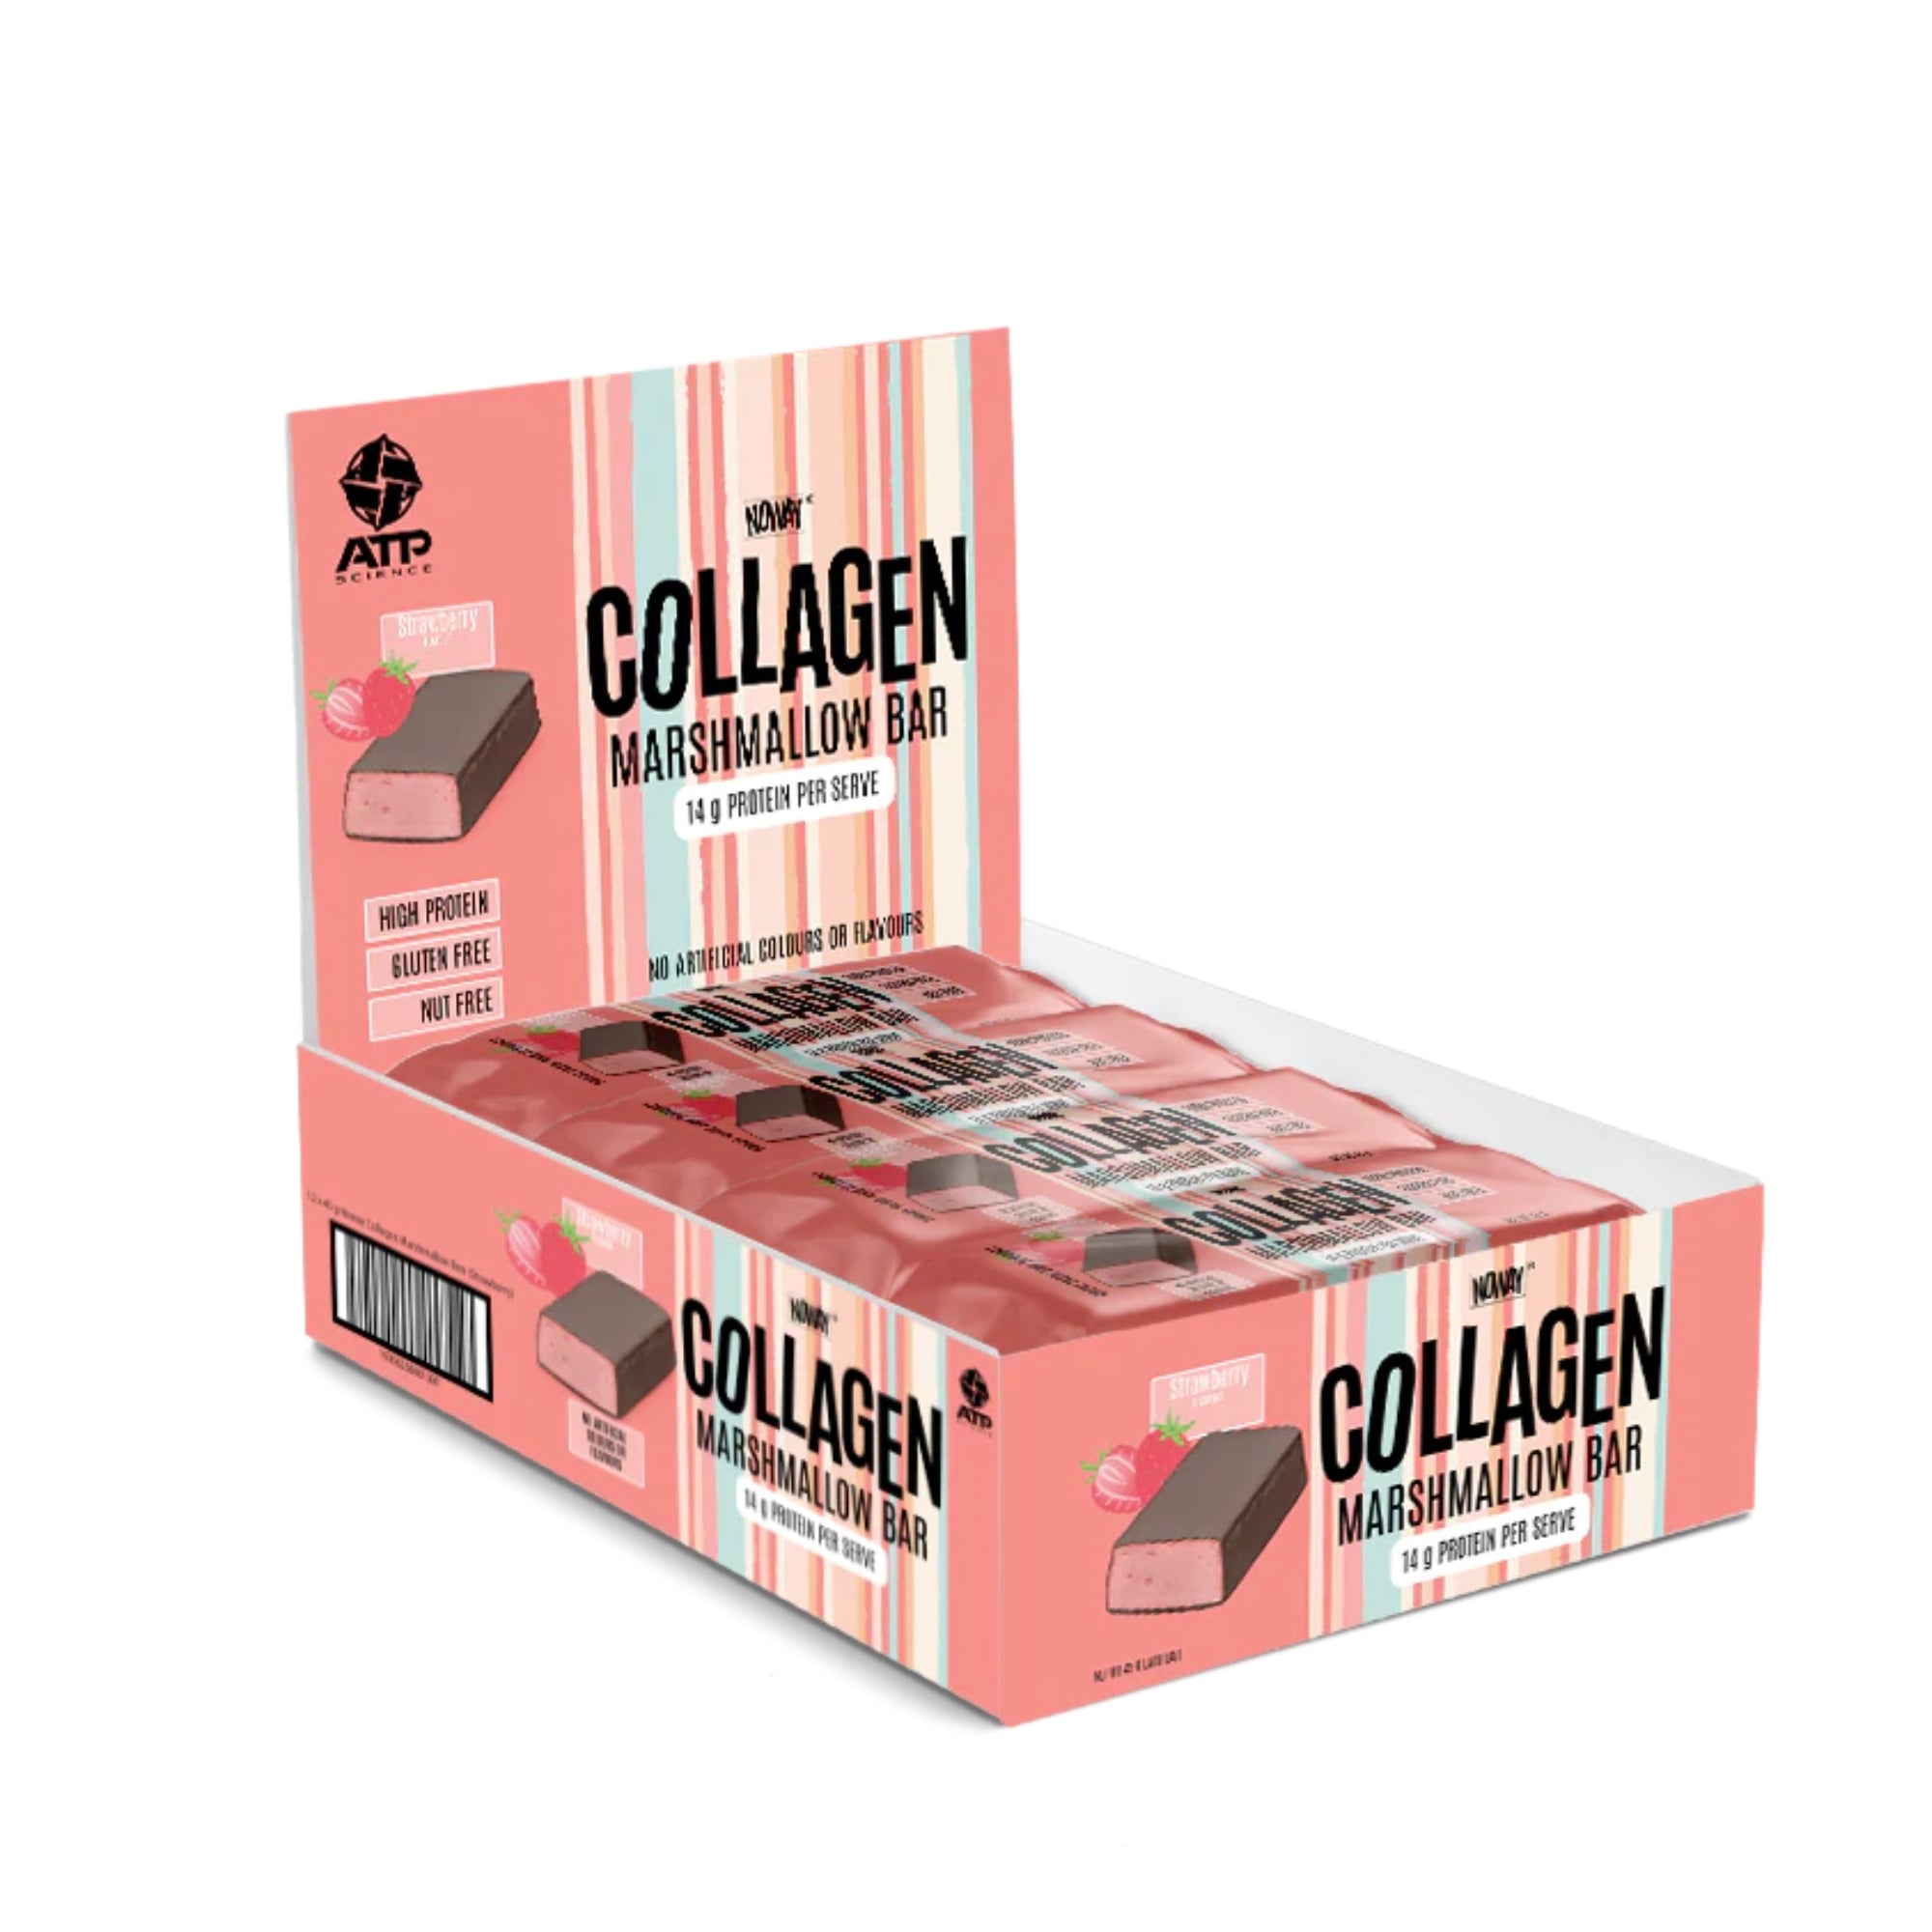 NoWay Collagen Marshmallow Bar - Strawberry